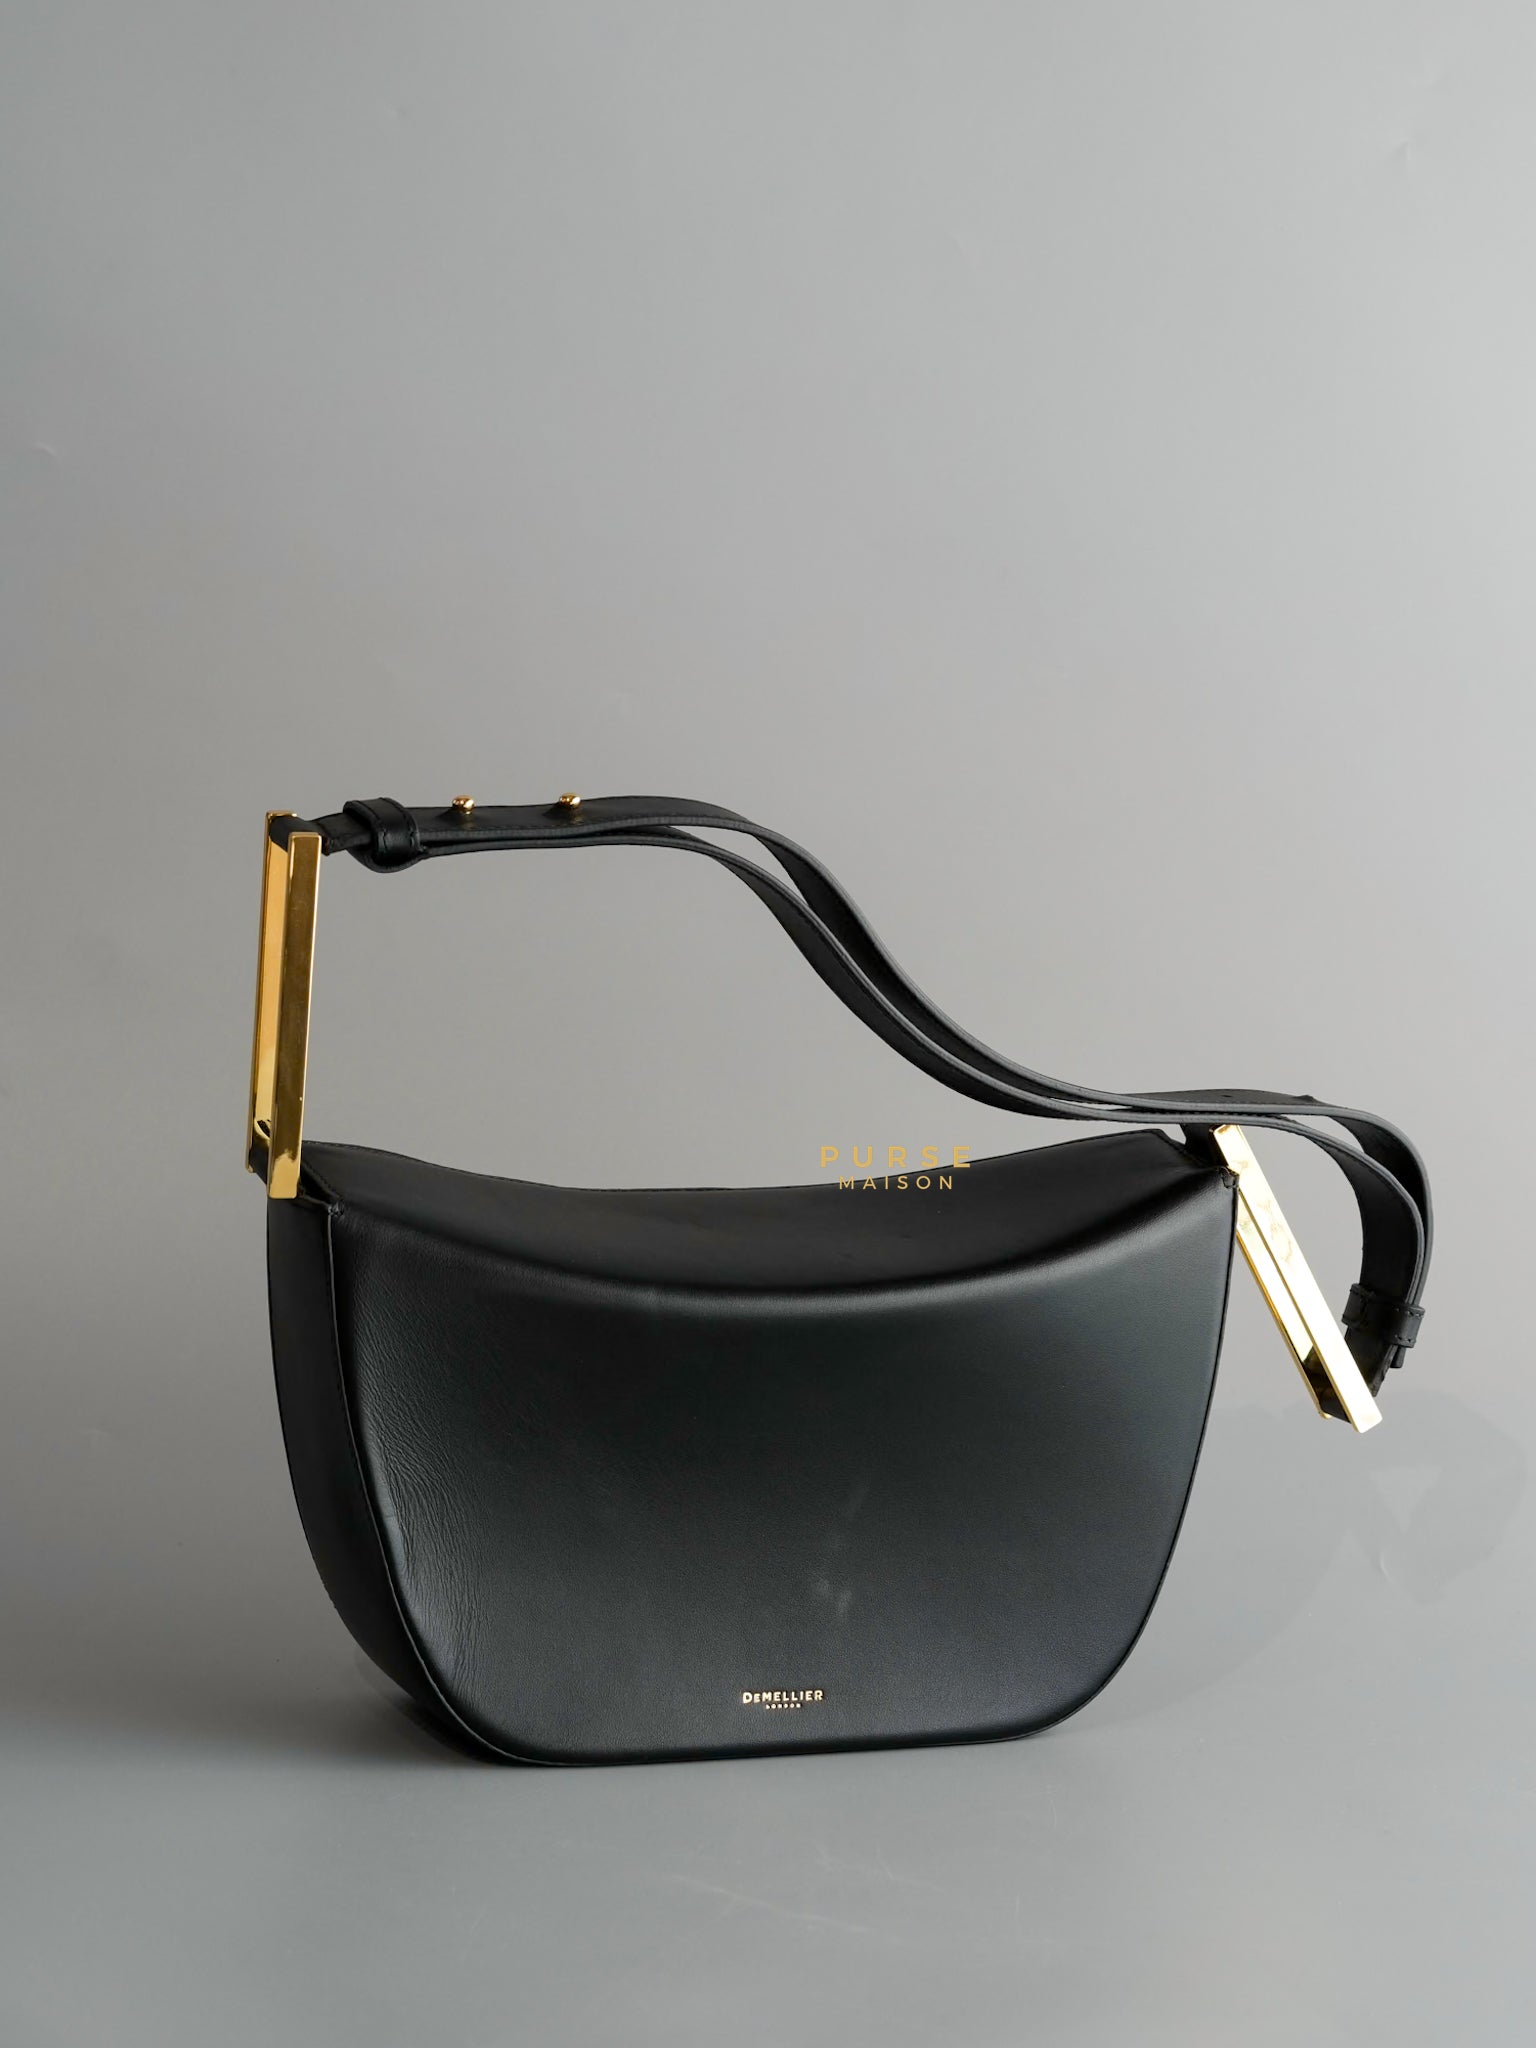 Demellier Bergen Top Handle Bag in Black | Purse Maison Luxury Bags Shop